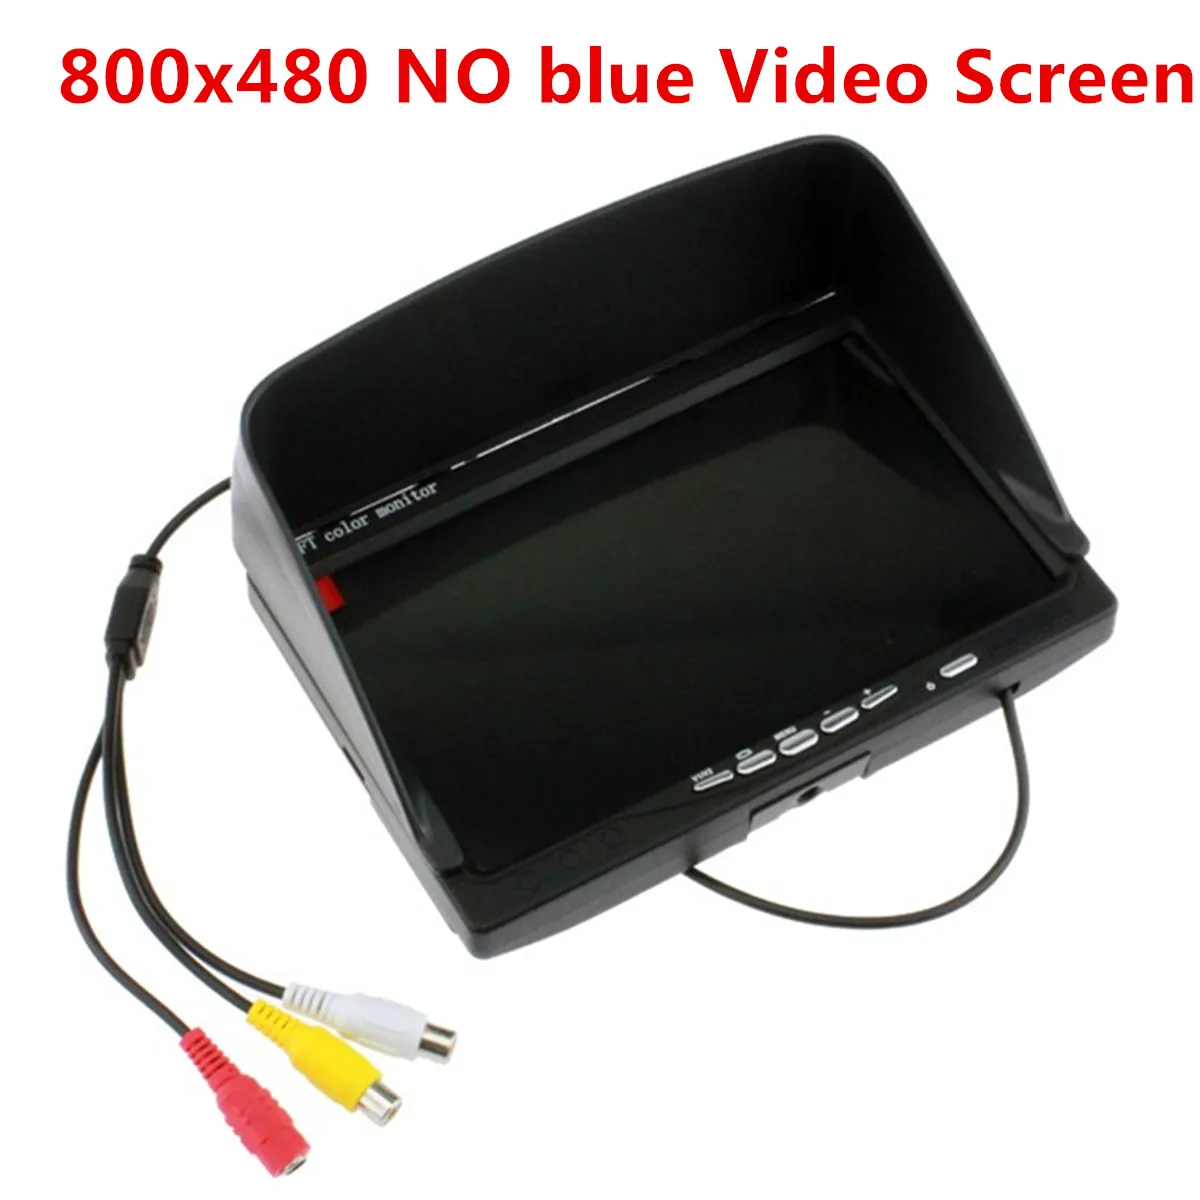 FPV 7 inch Not Blue Video Screen LCD TFT Monitor Photography HD 800x480 Screen w/Sun Shade for DJI Phantom QAV250 Ground Station